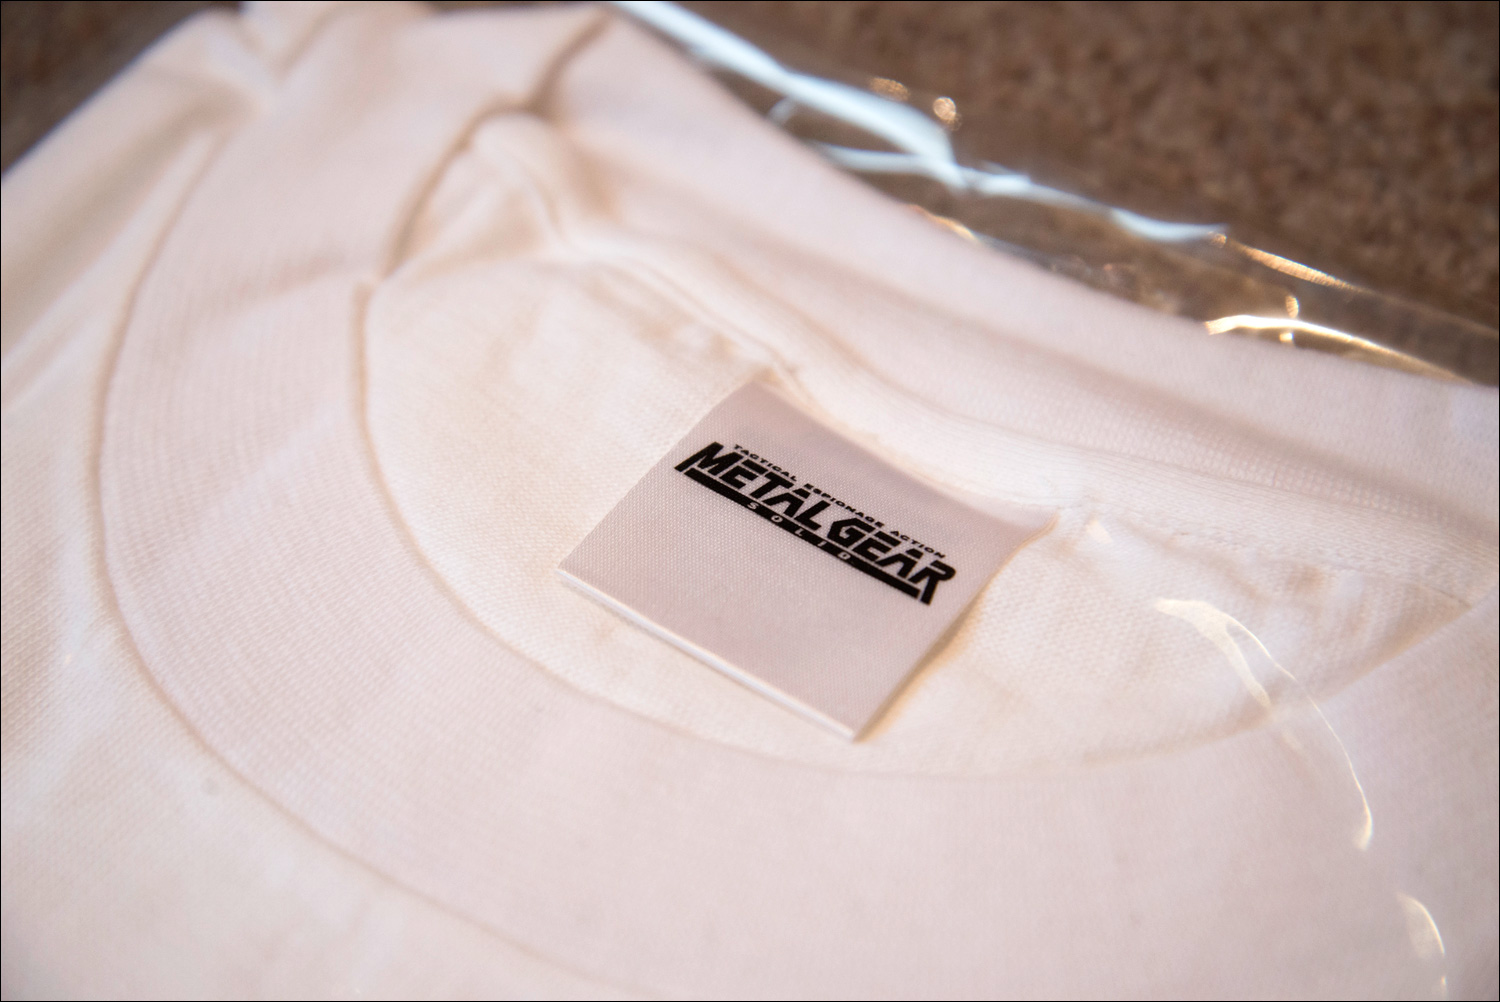 Metal-Gear-Solid-Premium-Package-Shirt-Label